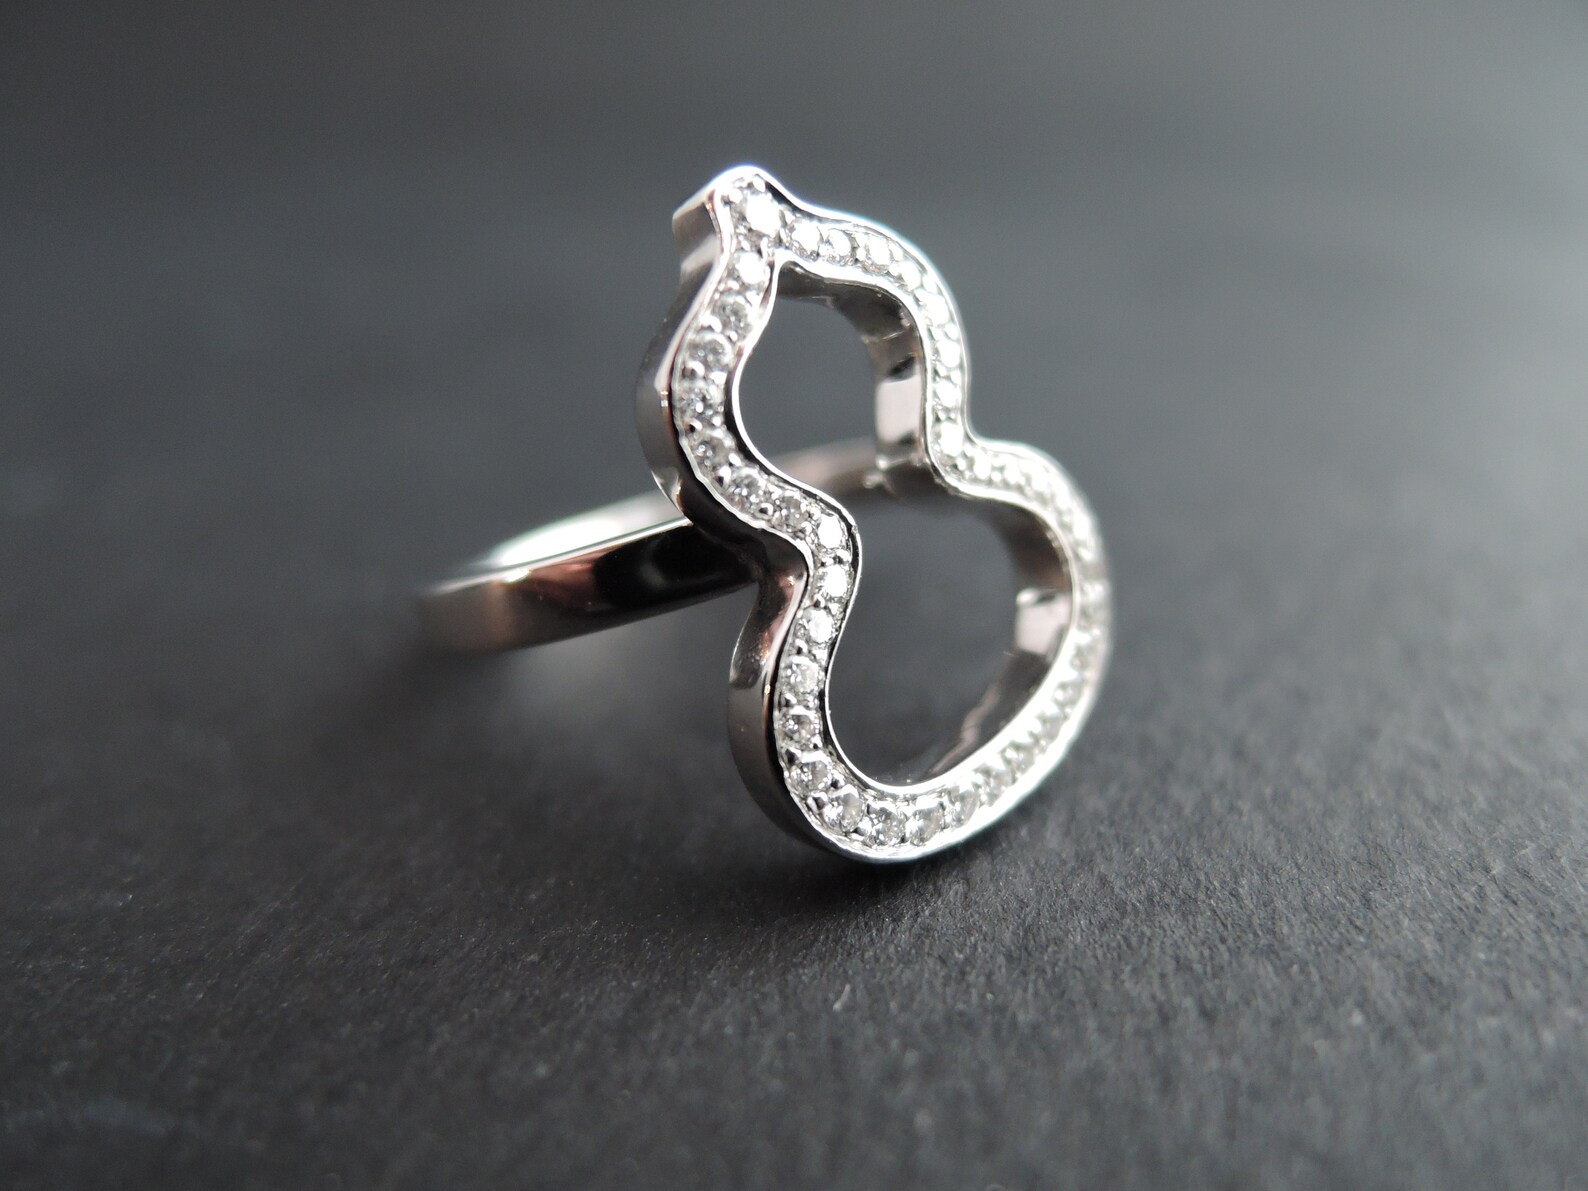 QEELIN Ring in 18 Carat White Gold Set With Diamonds. - Etsy UK